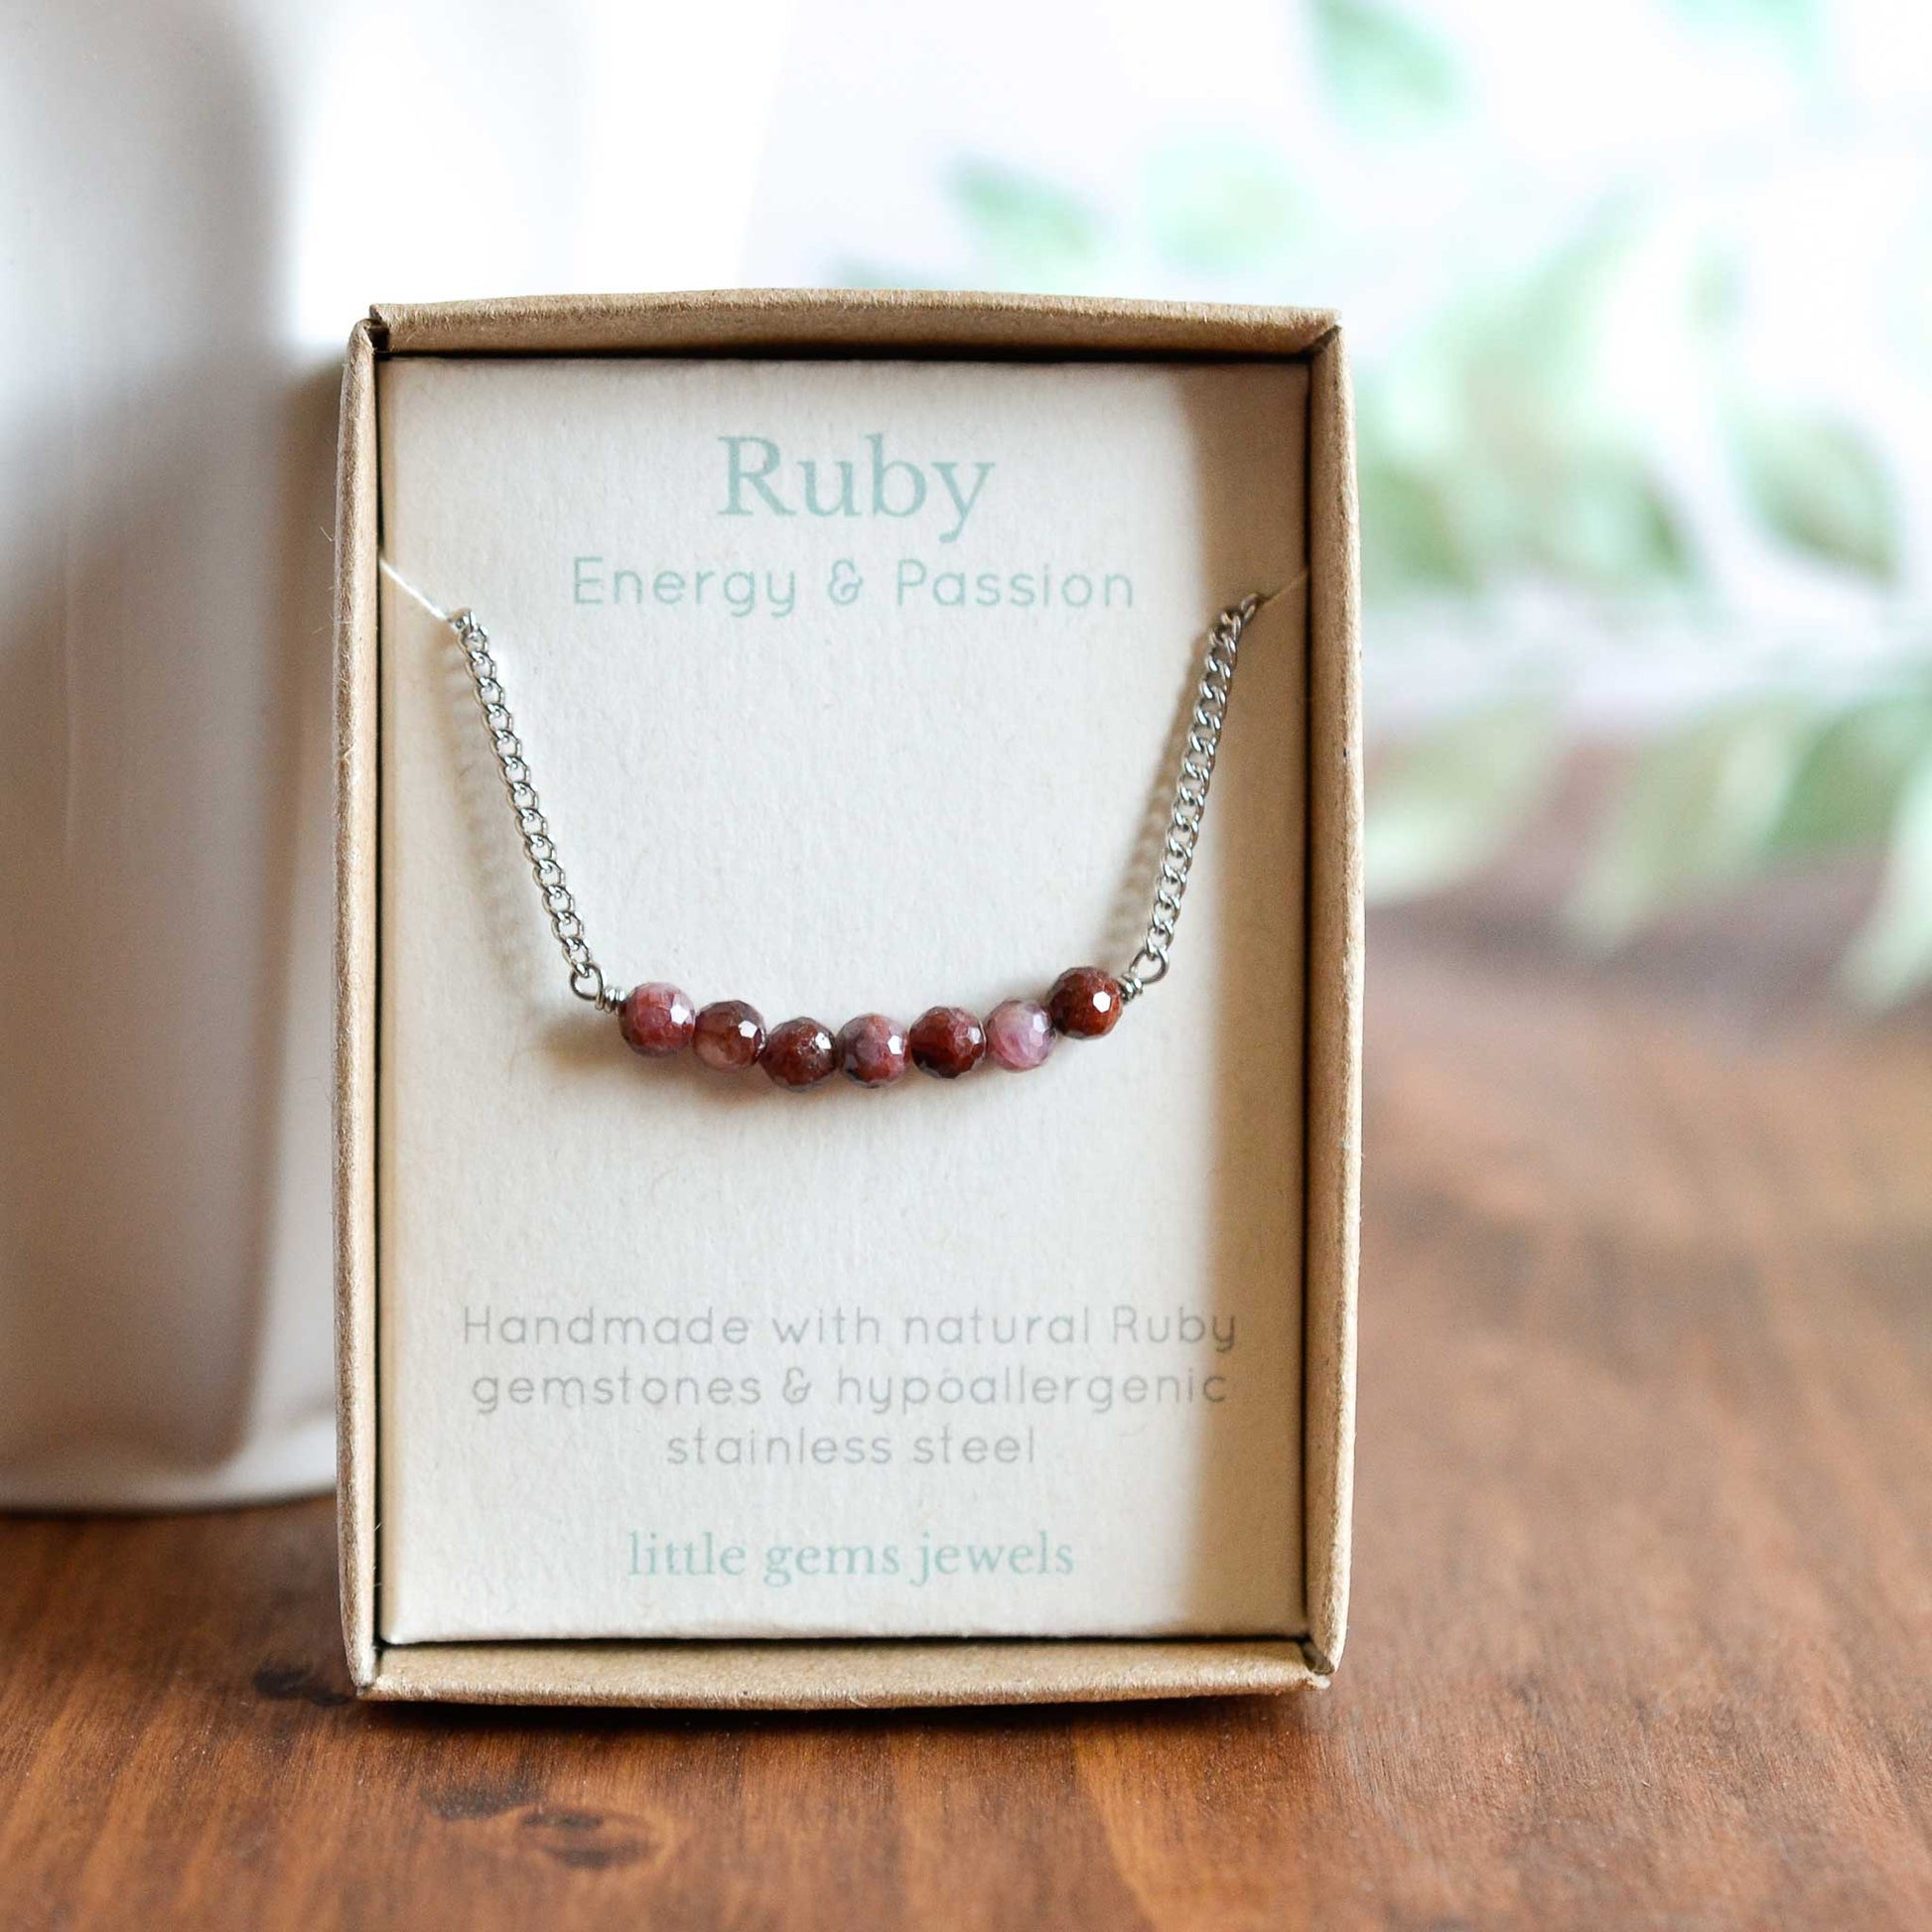 Dainty Ruby gemstone necklace in eco friendly gift box